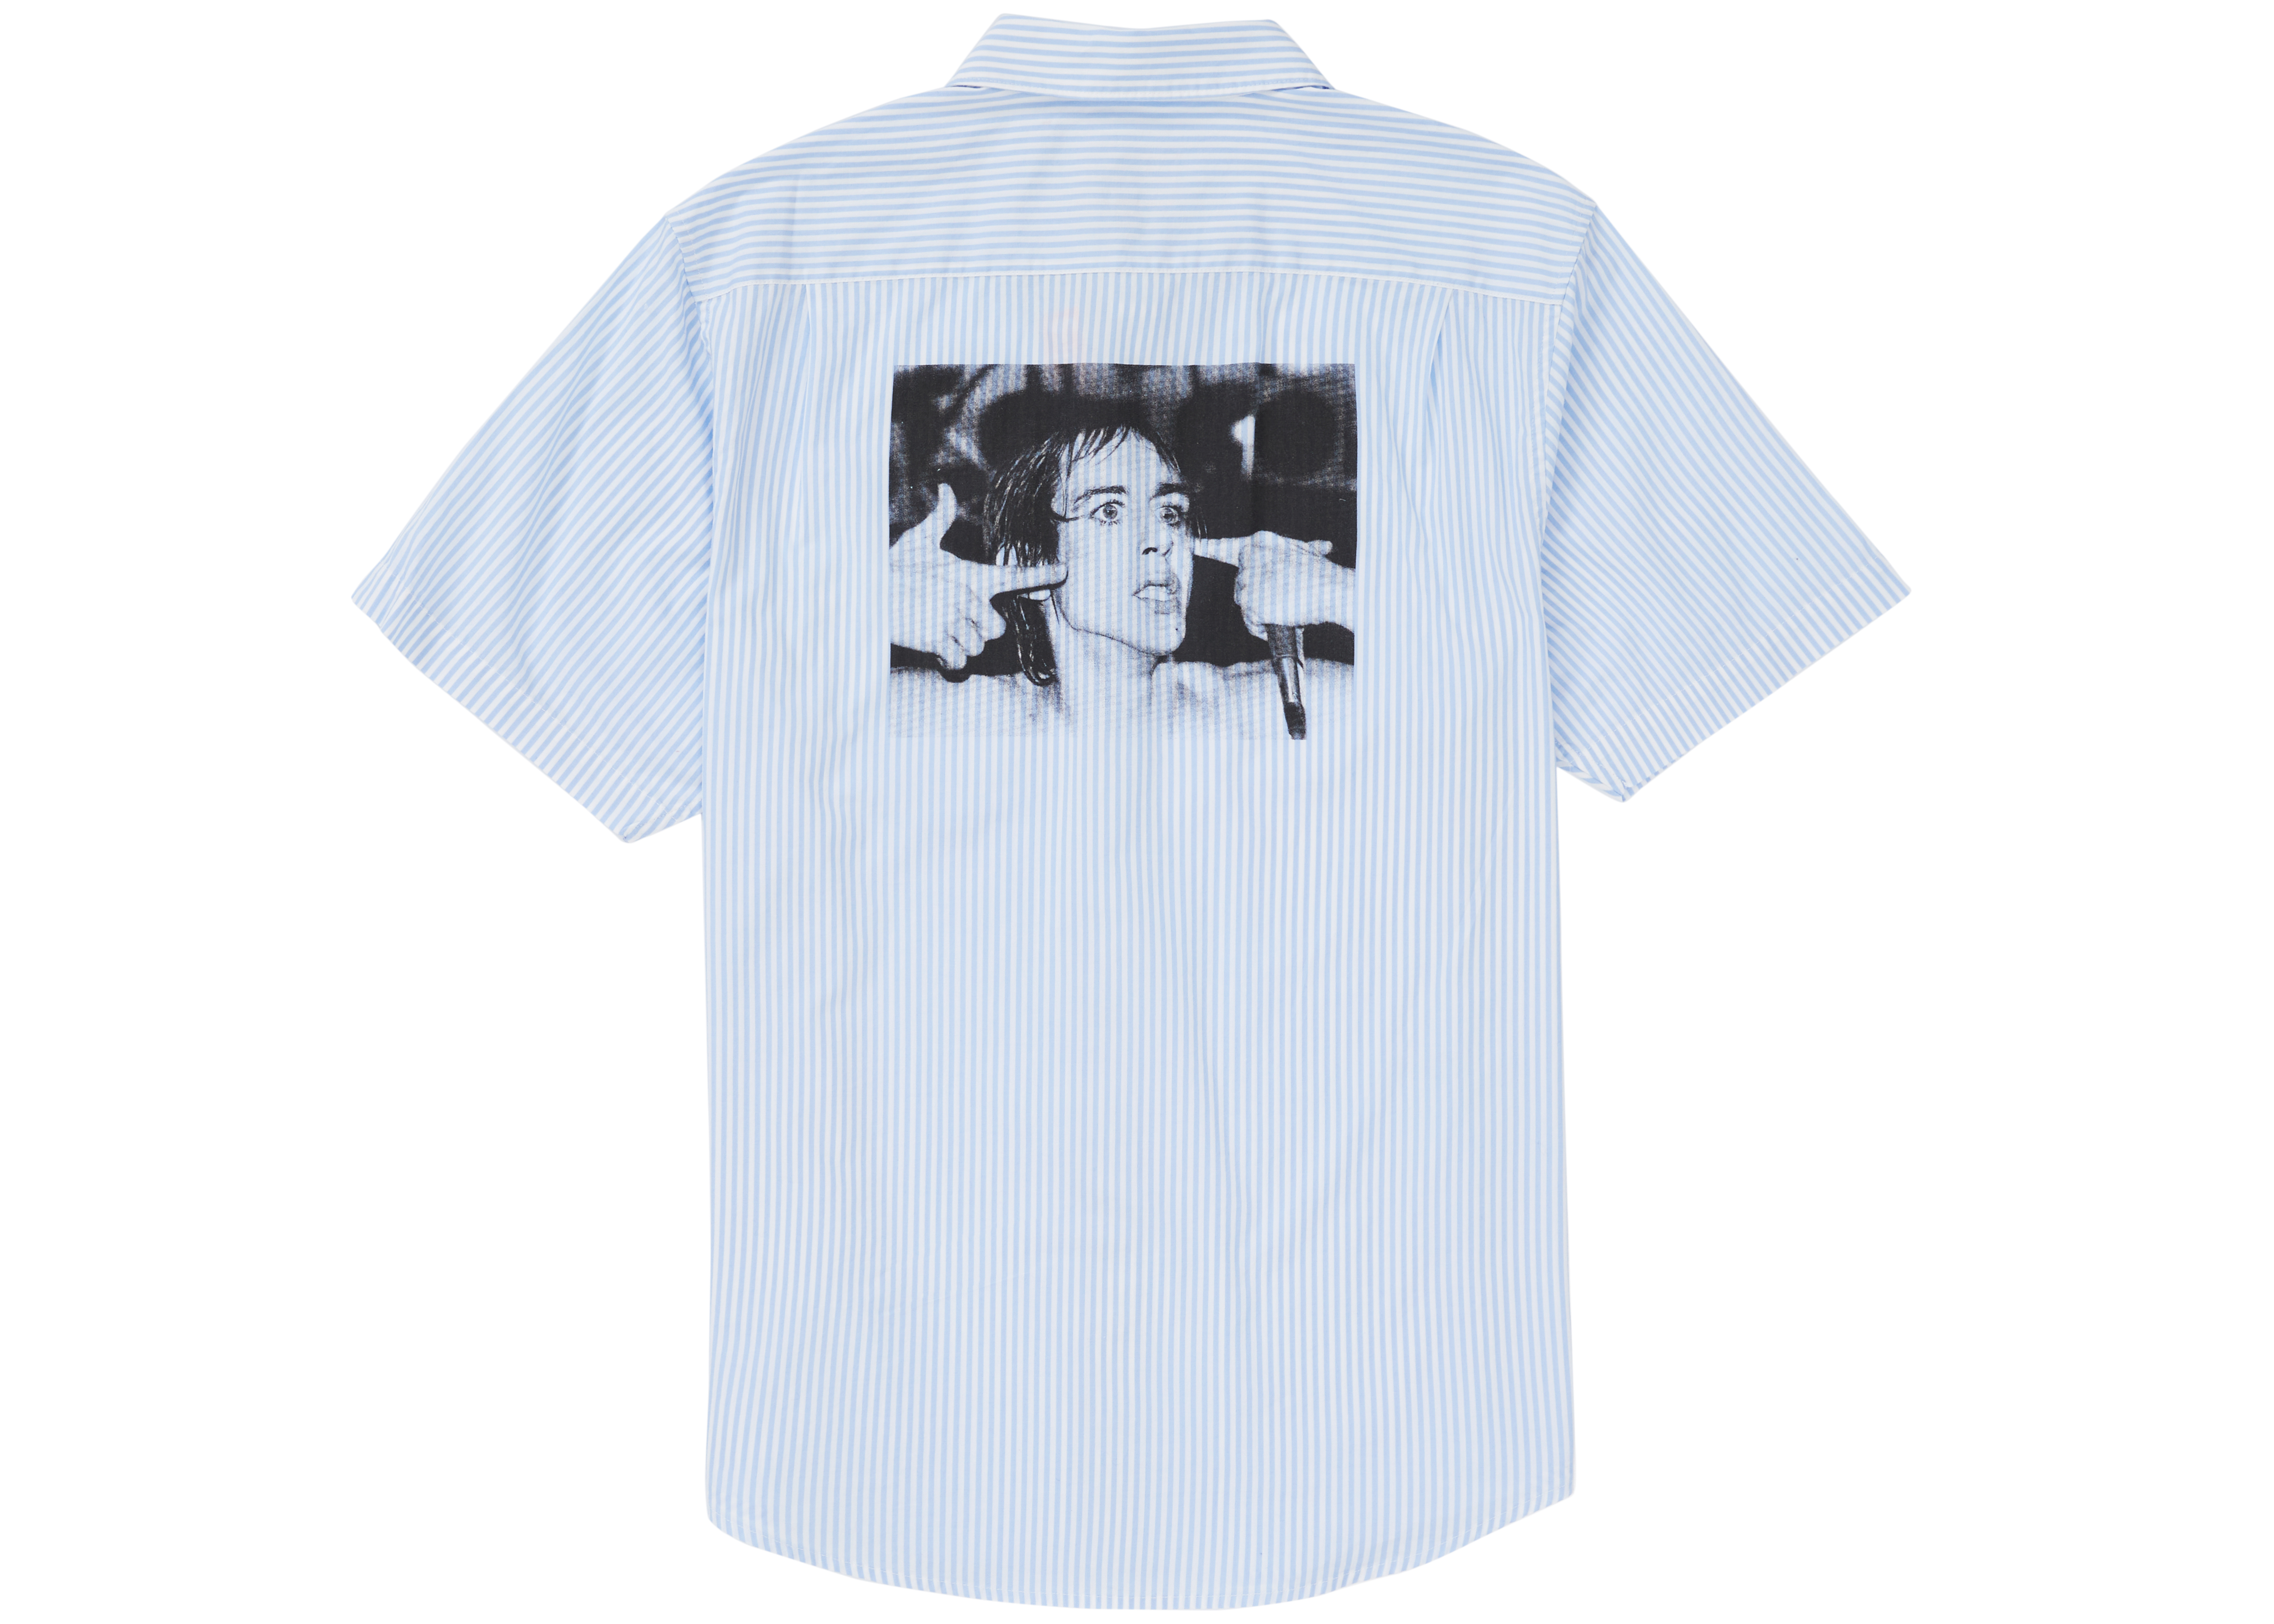 Supreme Iggy Pop S/S Shirt "Stripe" sサイズ